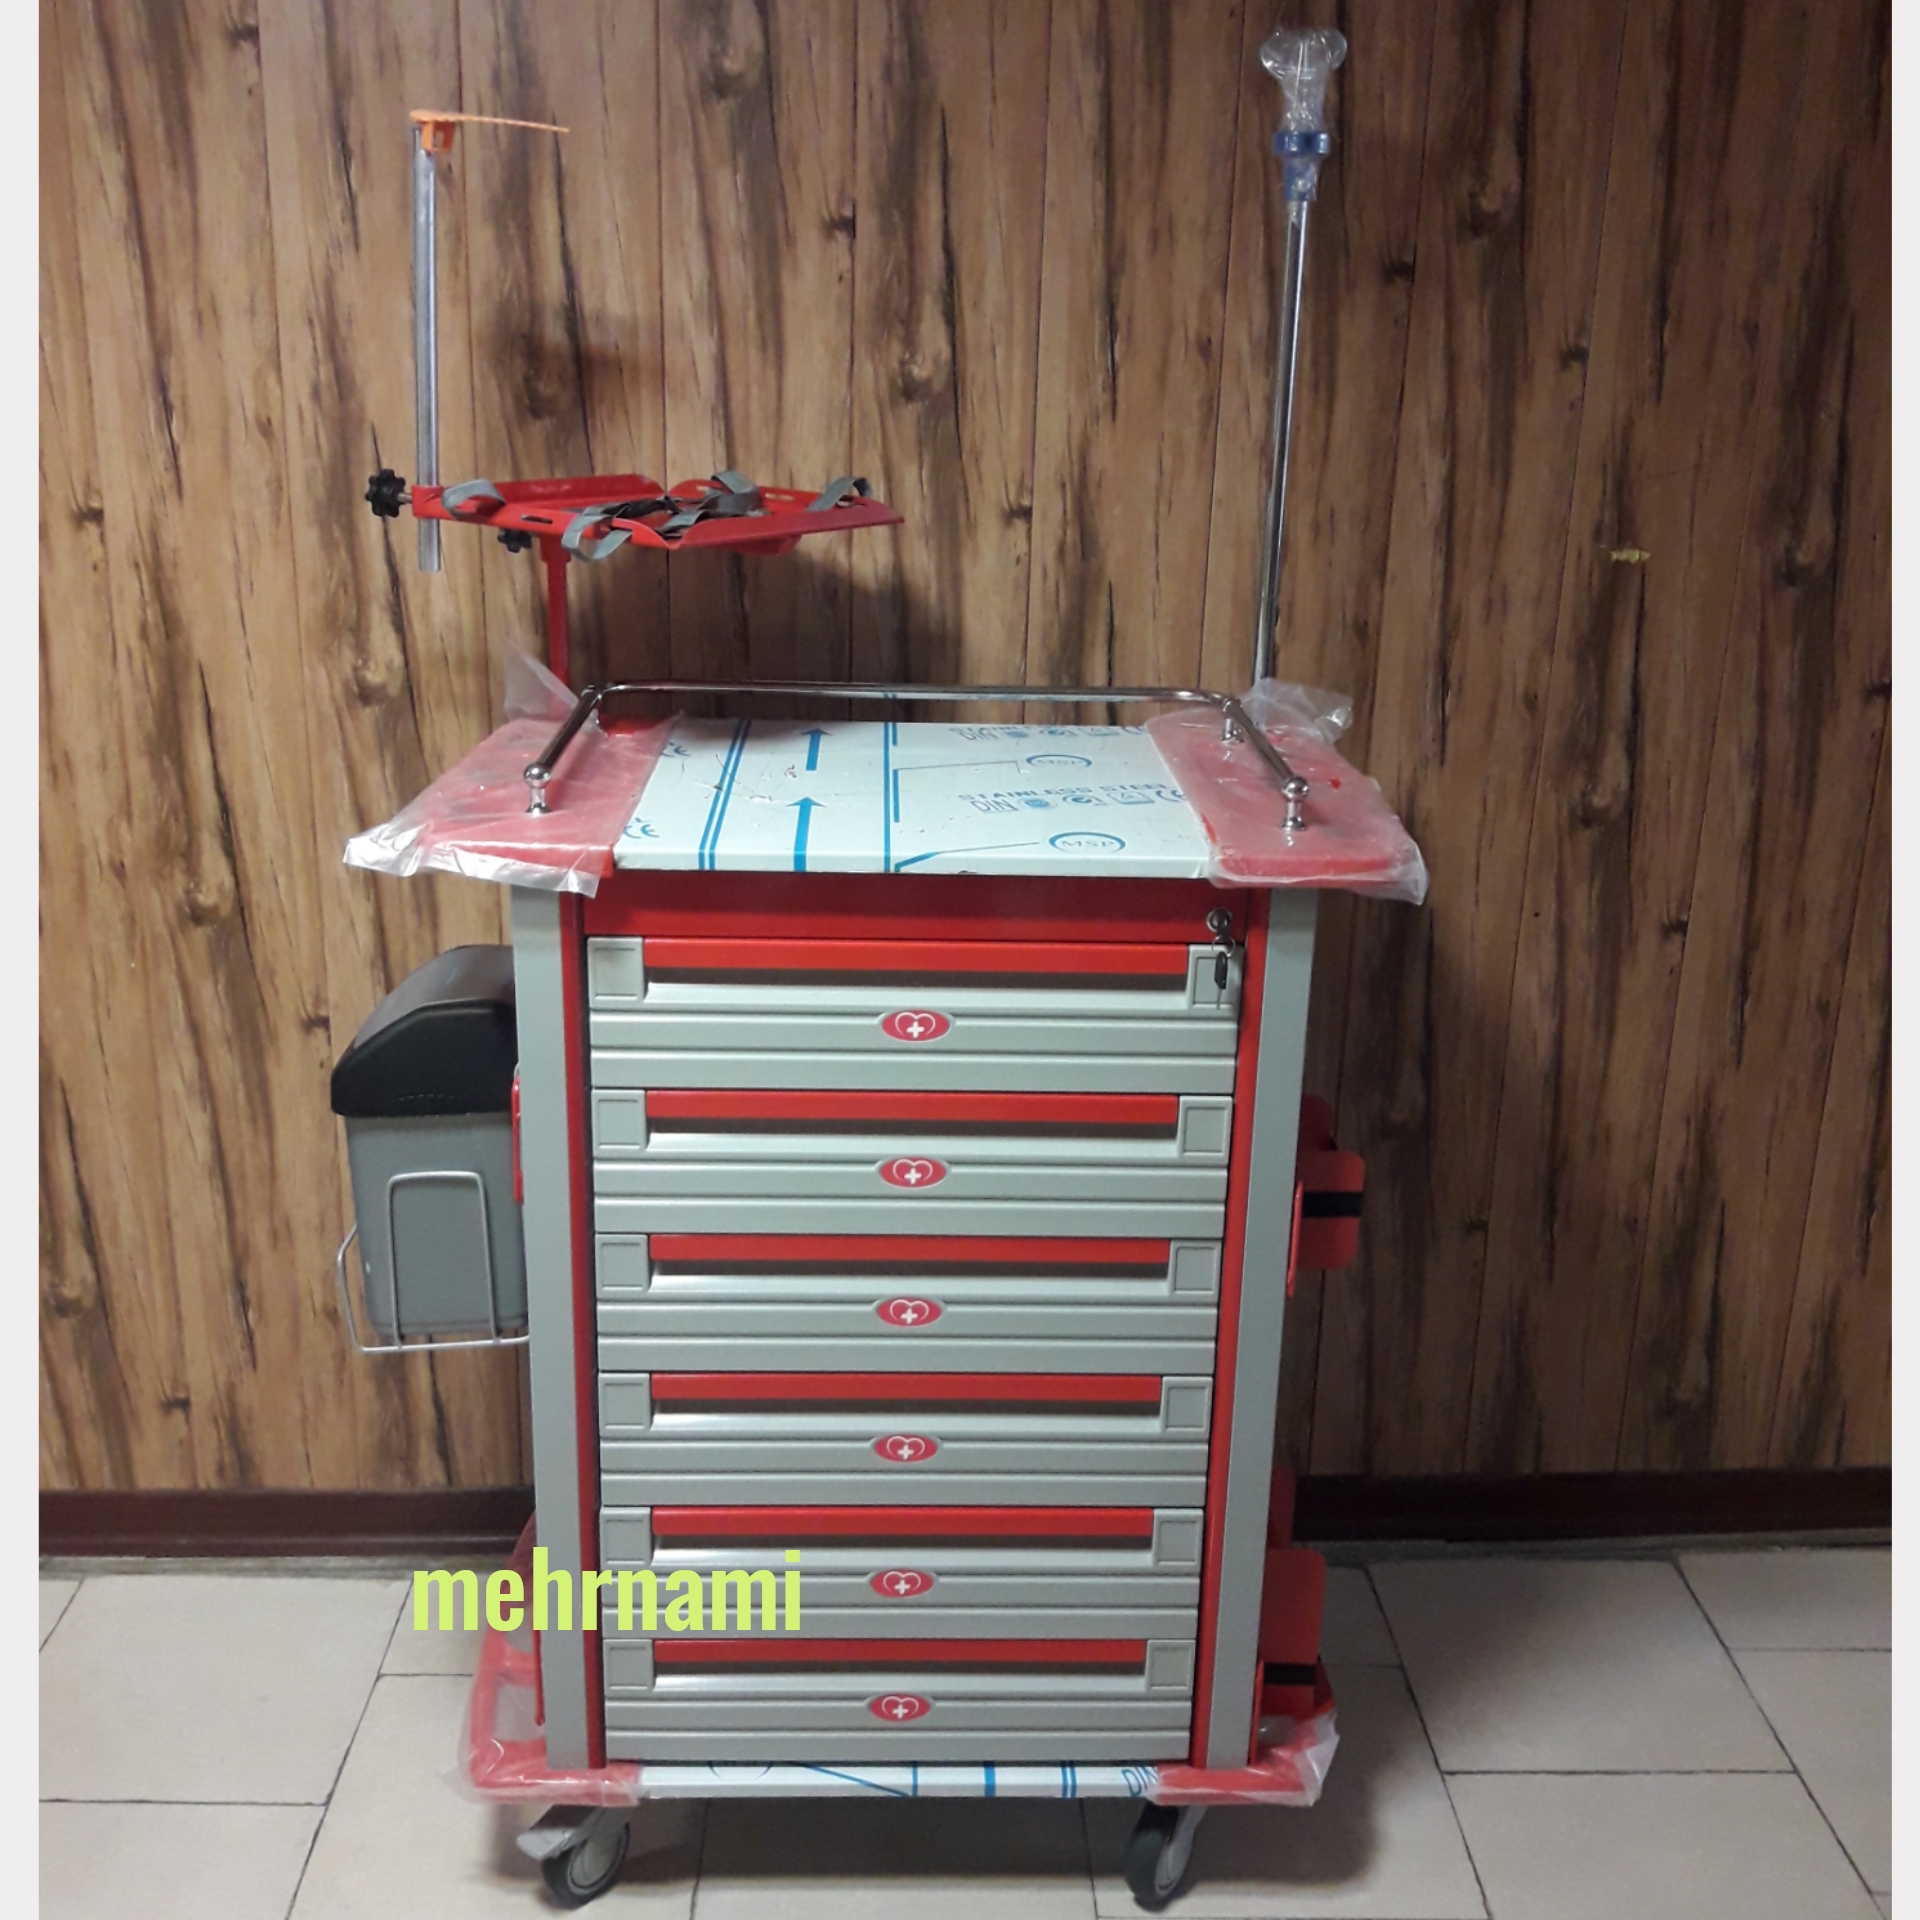 ترالی اورژانس مطب شرکت تجهیزات پزشکی مهرنامی